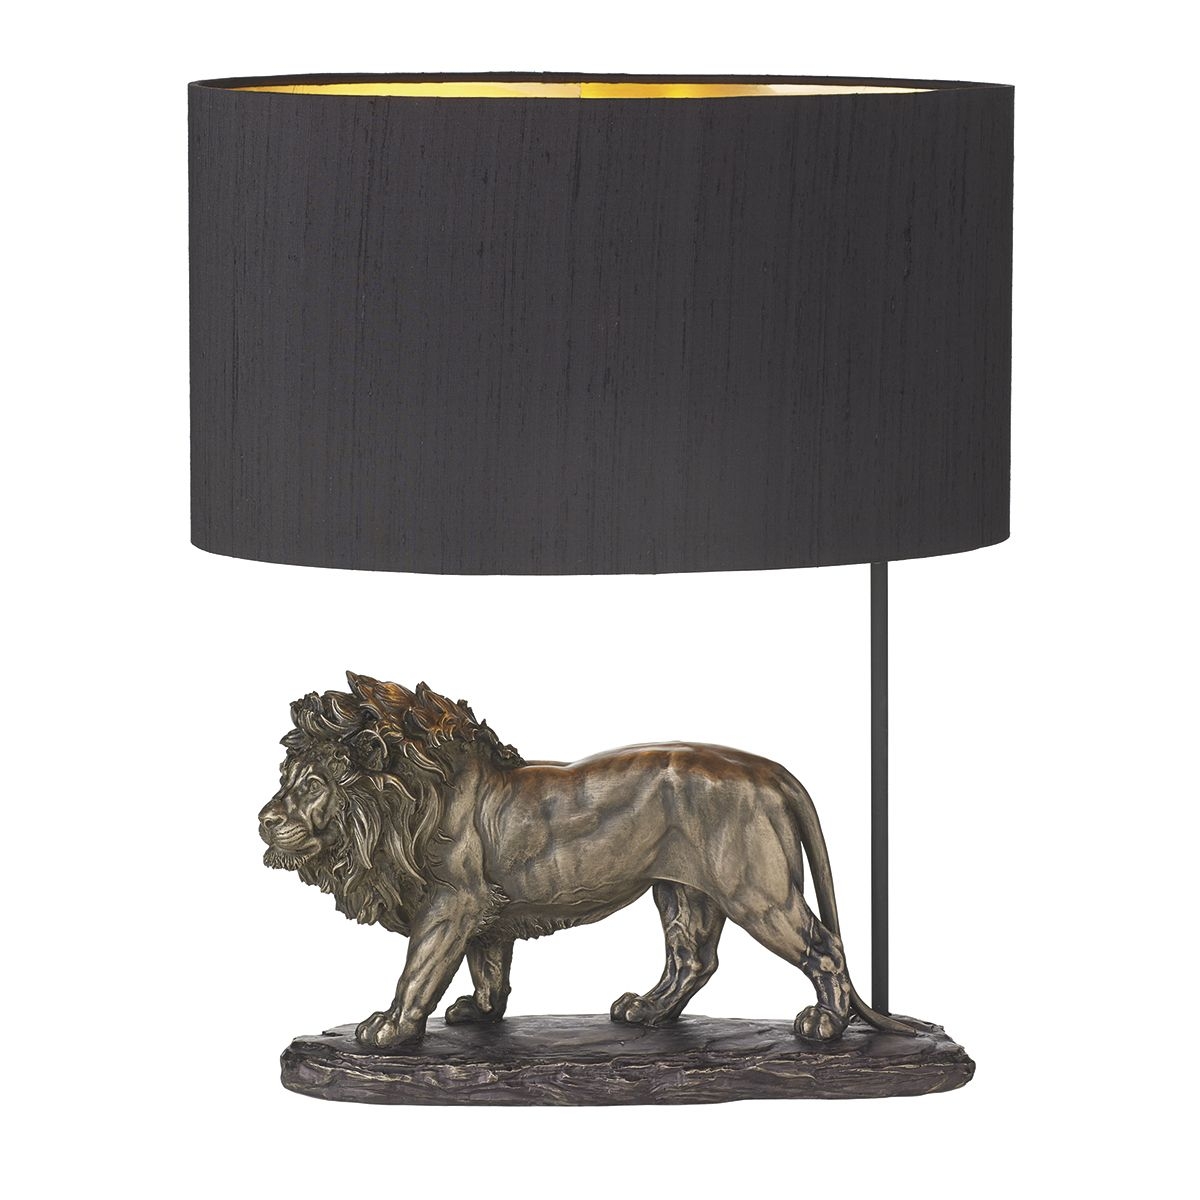 The david hunt lighting collection royal bronze lion table lamp